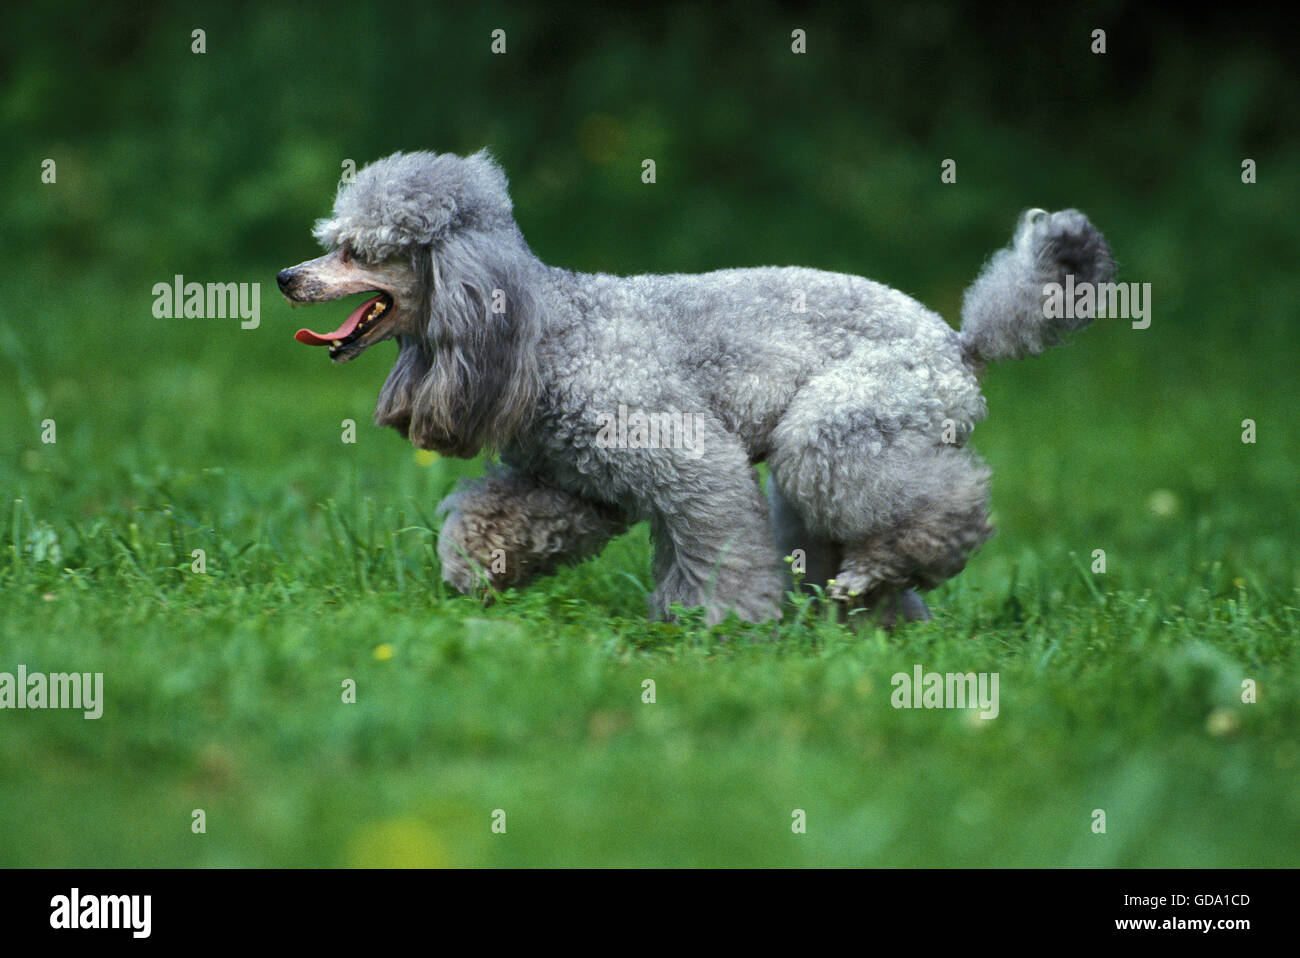 grey mini poodle